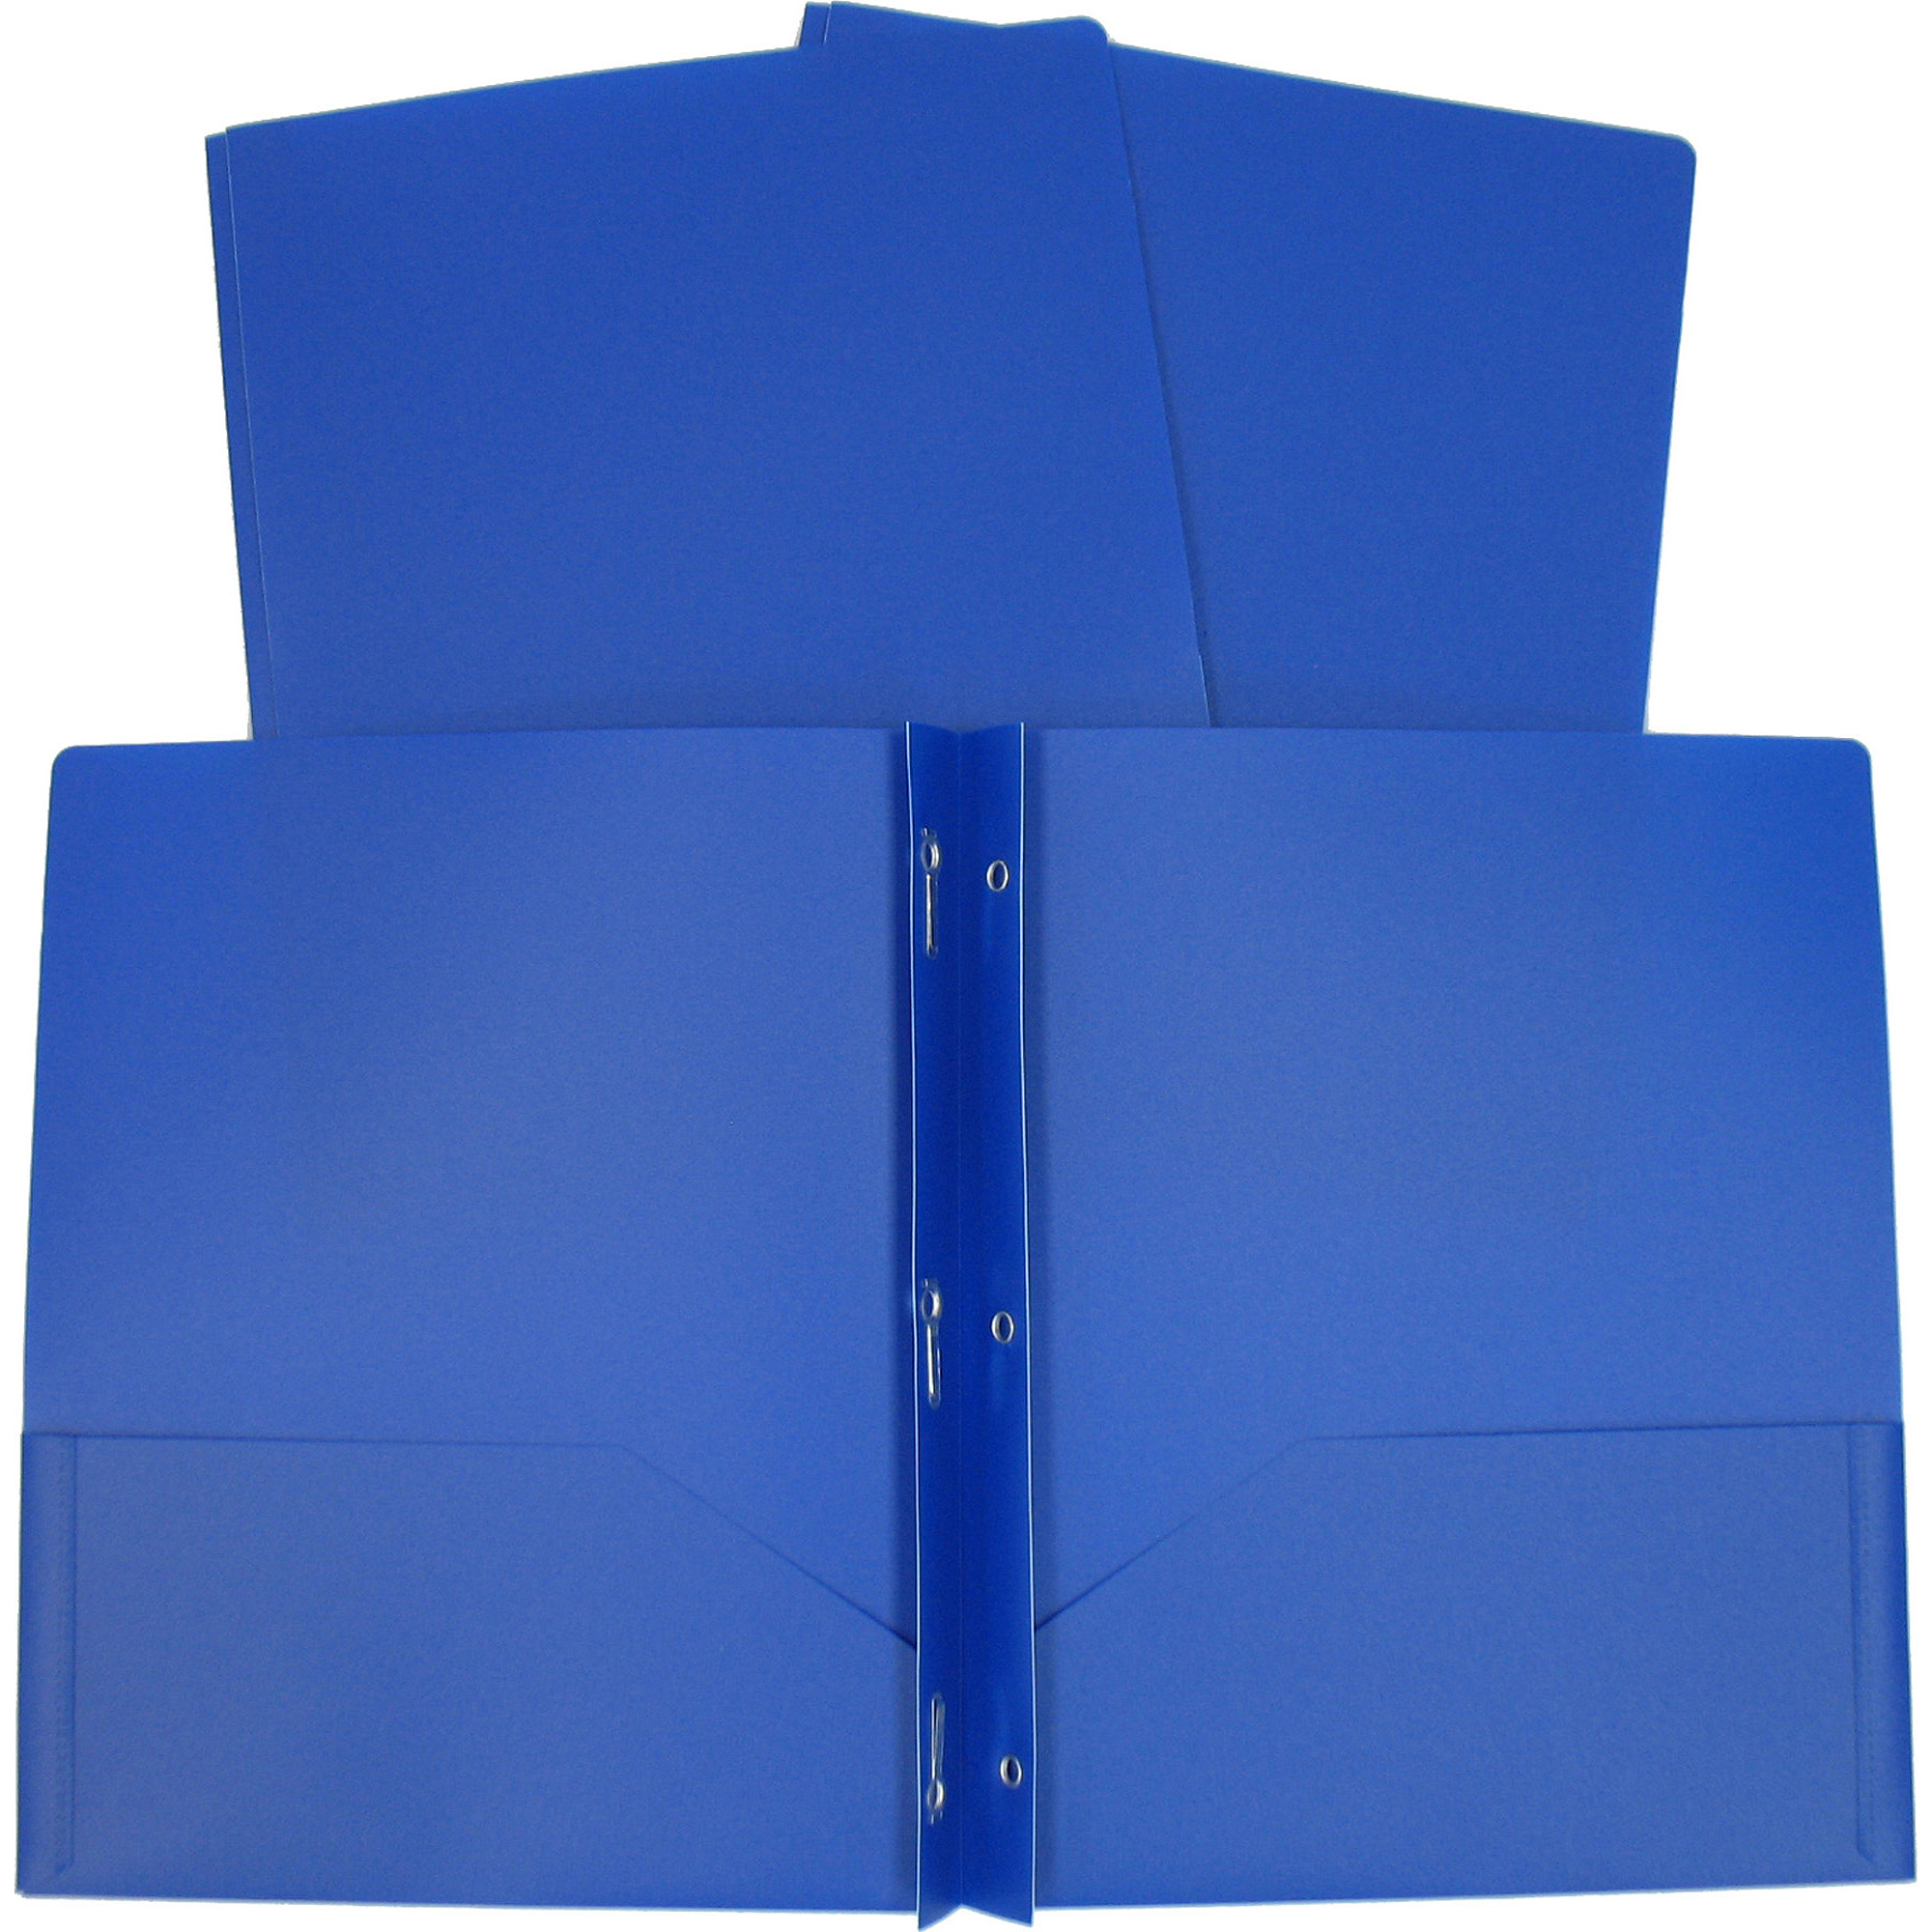 D3 Casemate Blue 3 Prong Portfolio - image 1 of 2